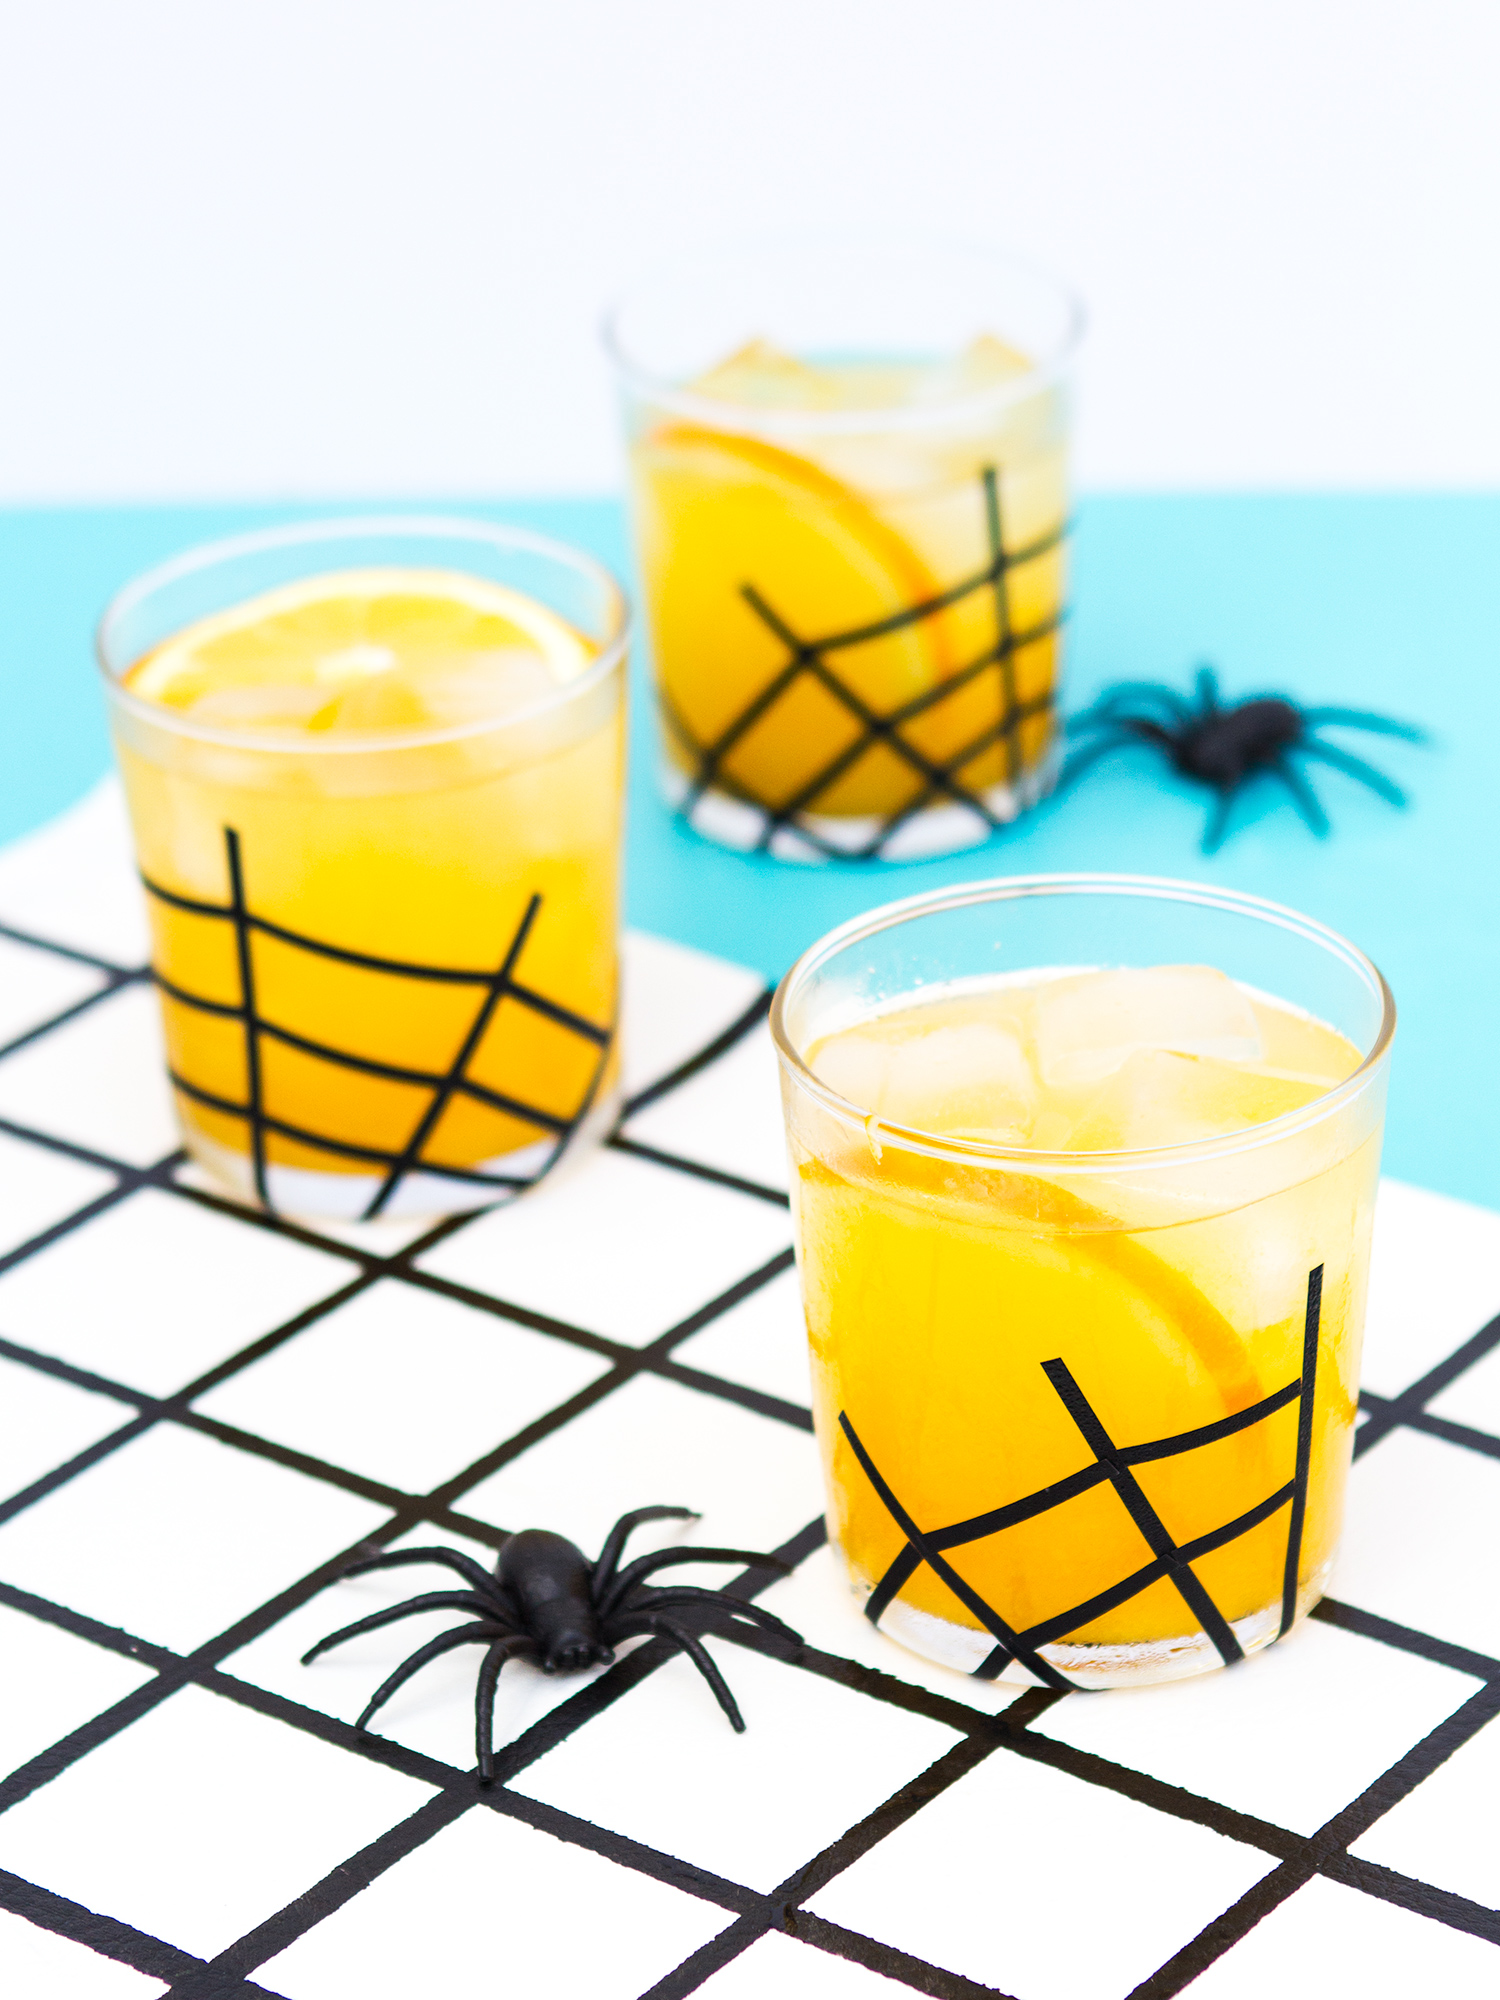 31 Refreshing Halloween Cocktails